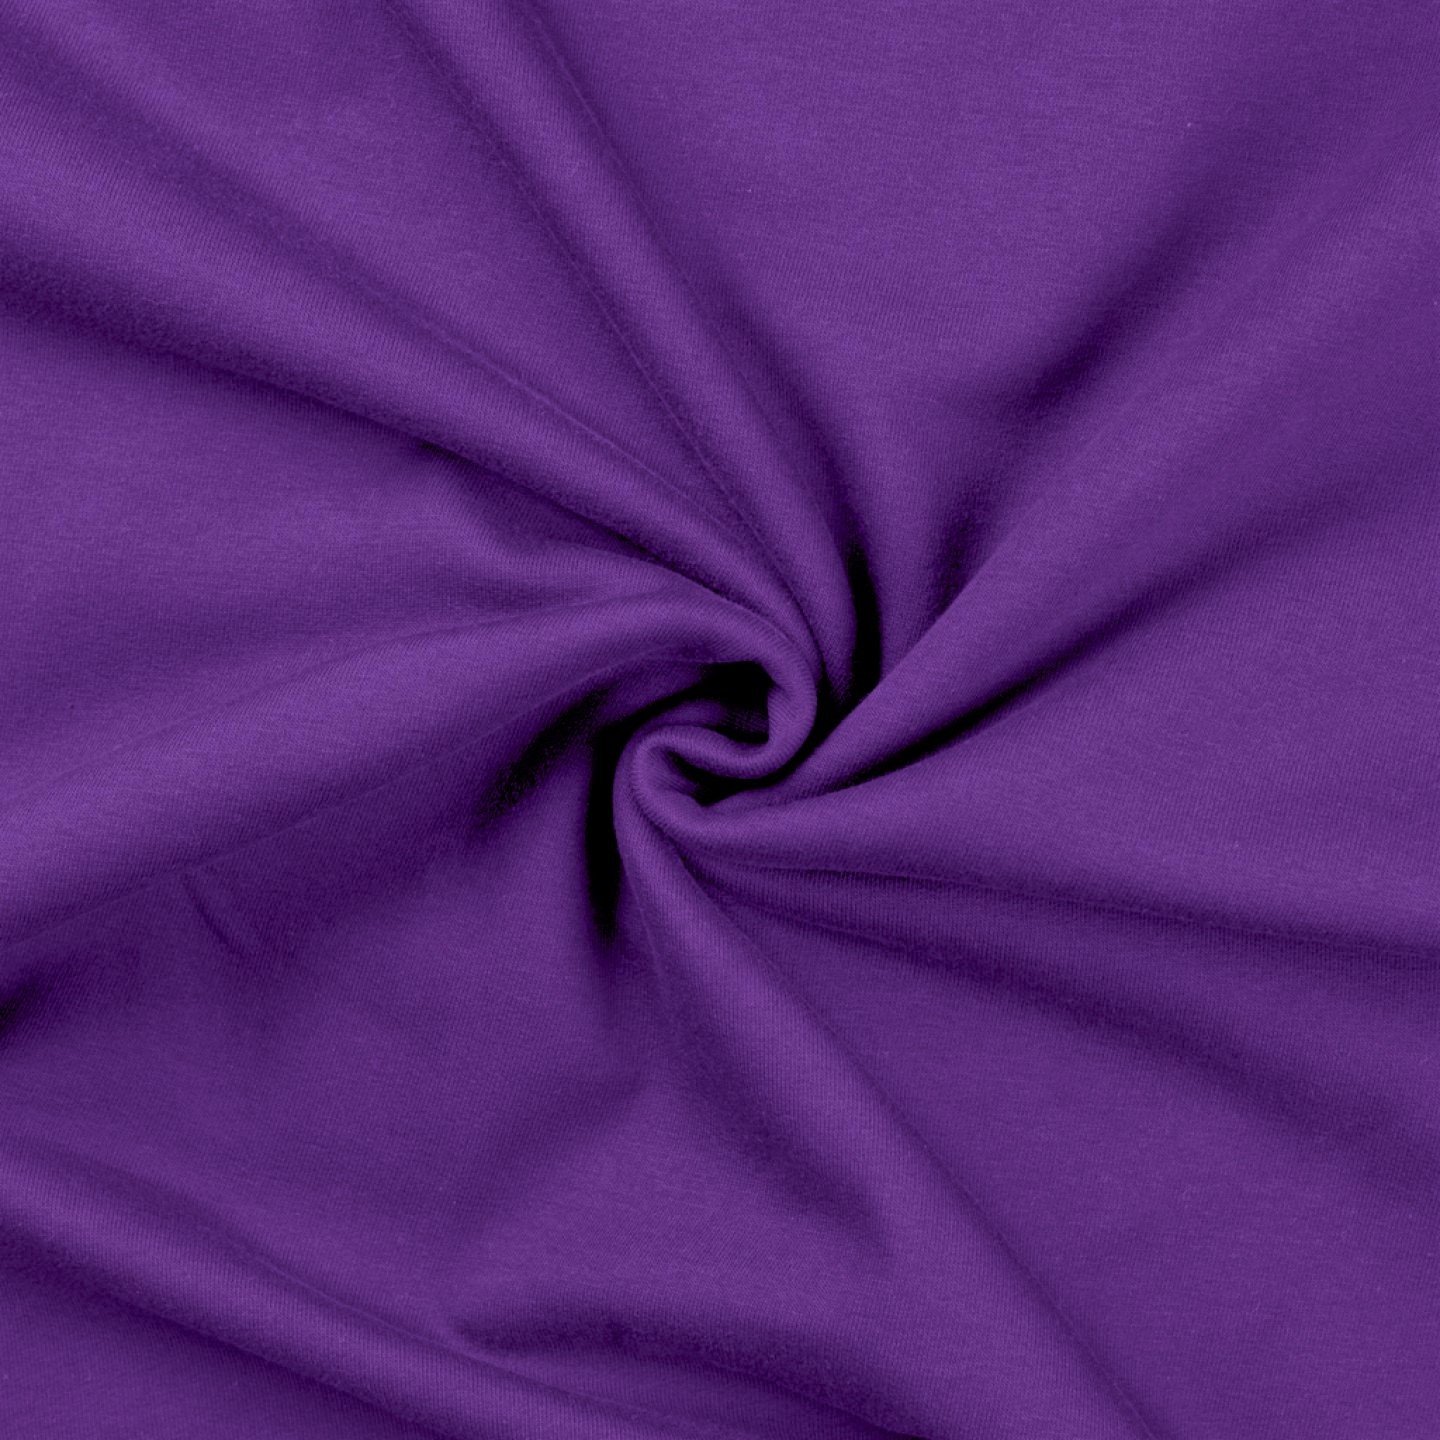 French Terry Milan uni purple (470)                      